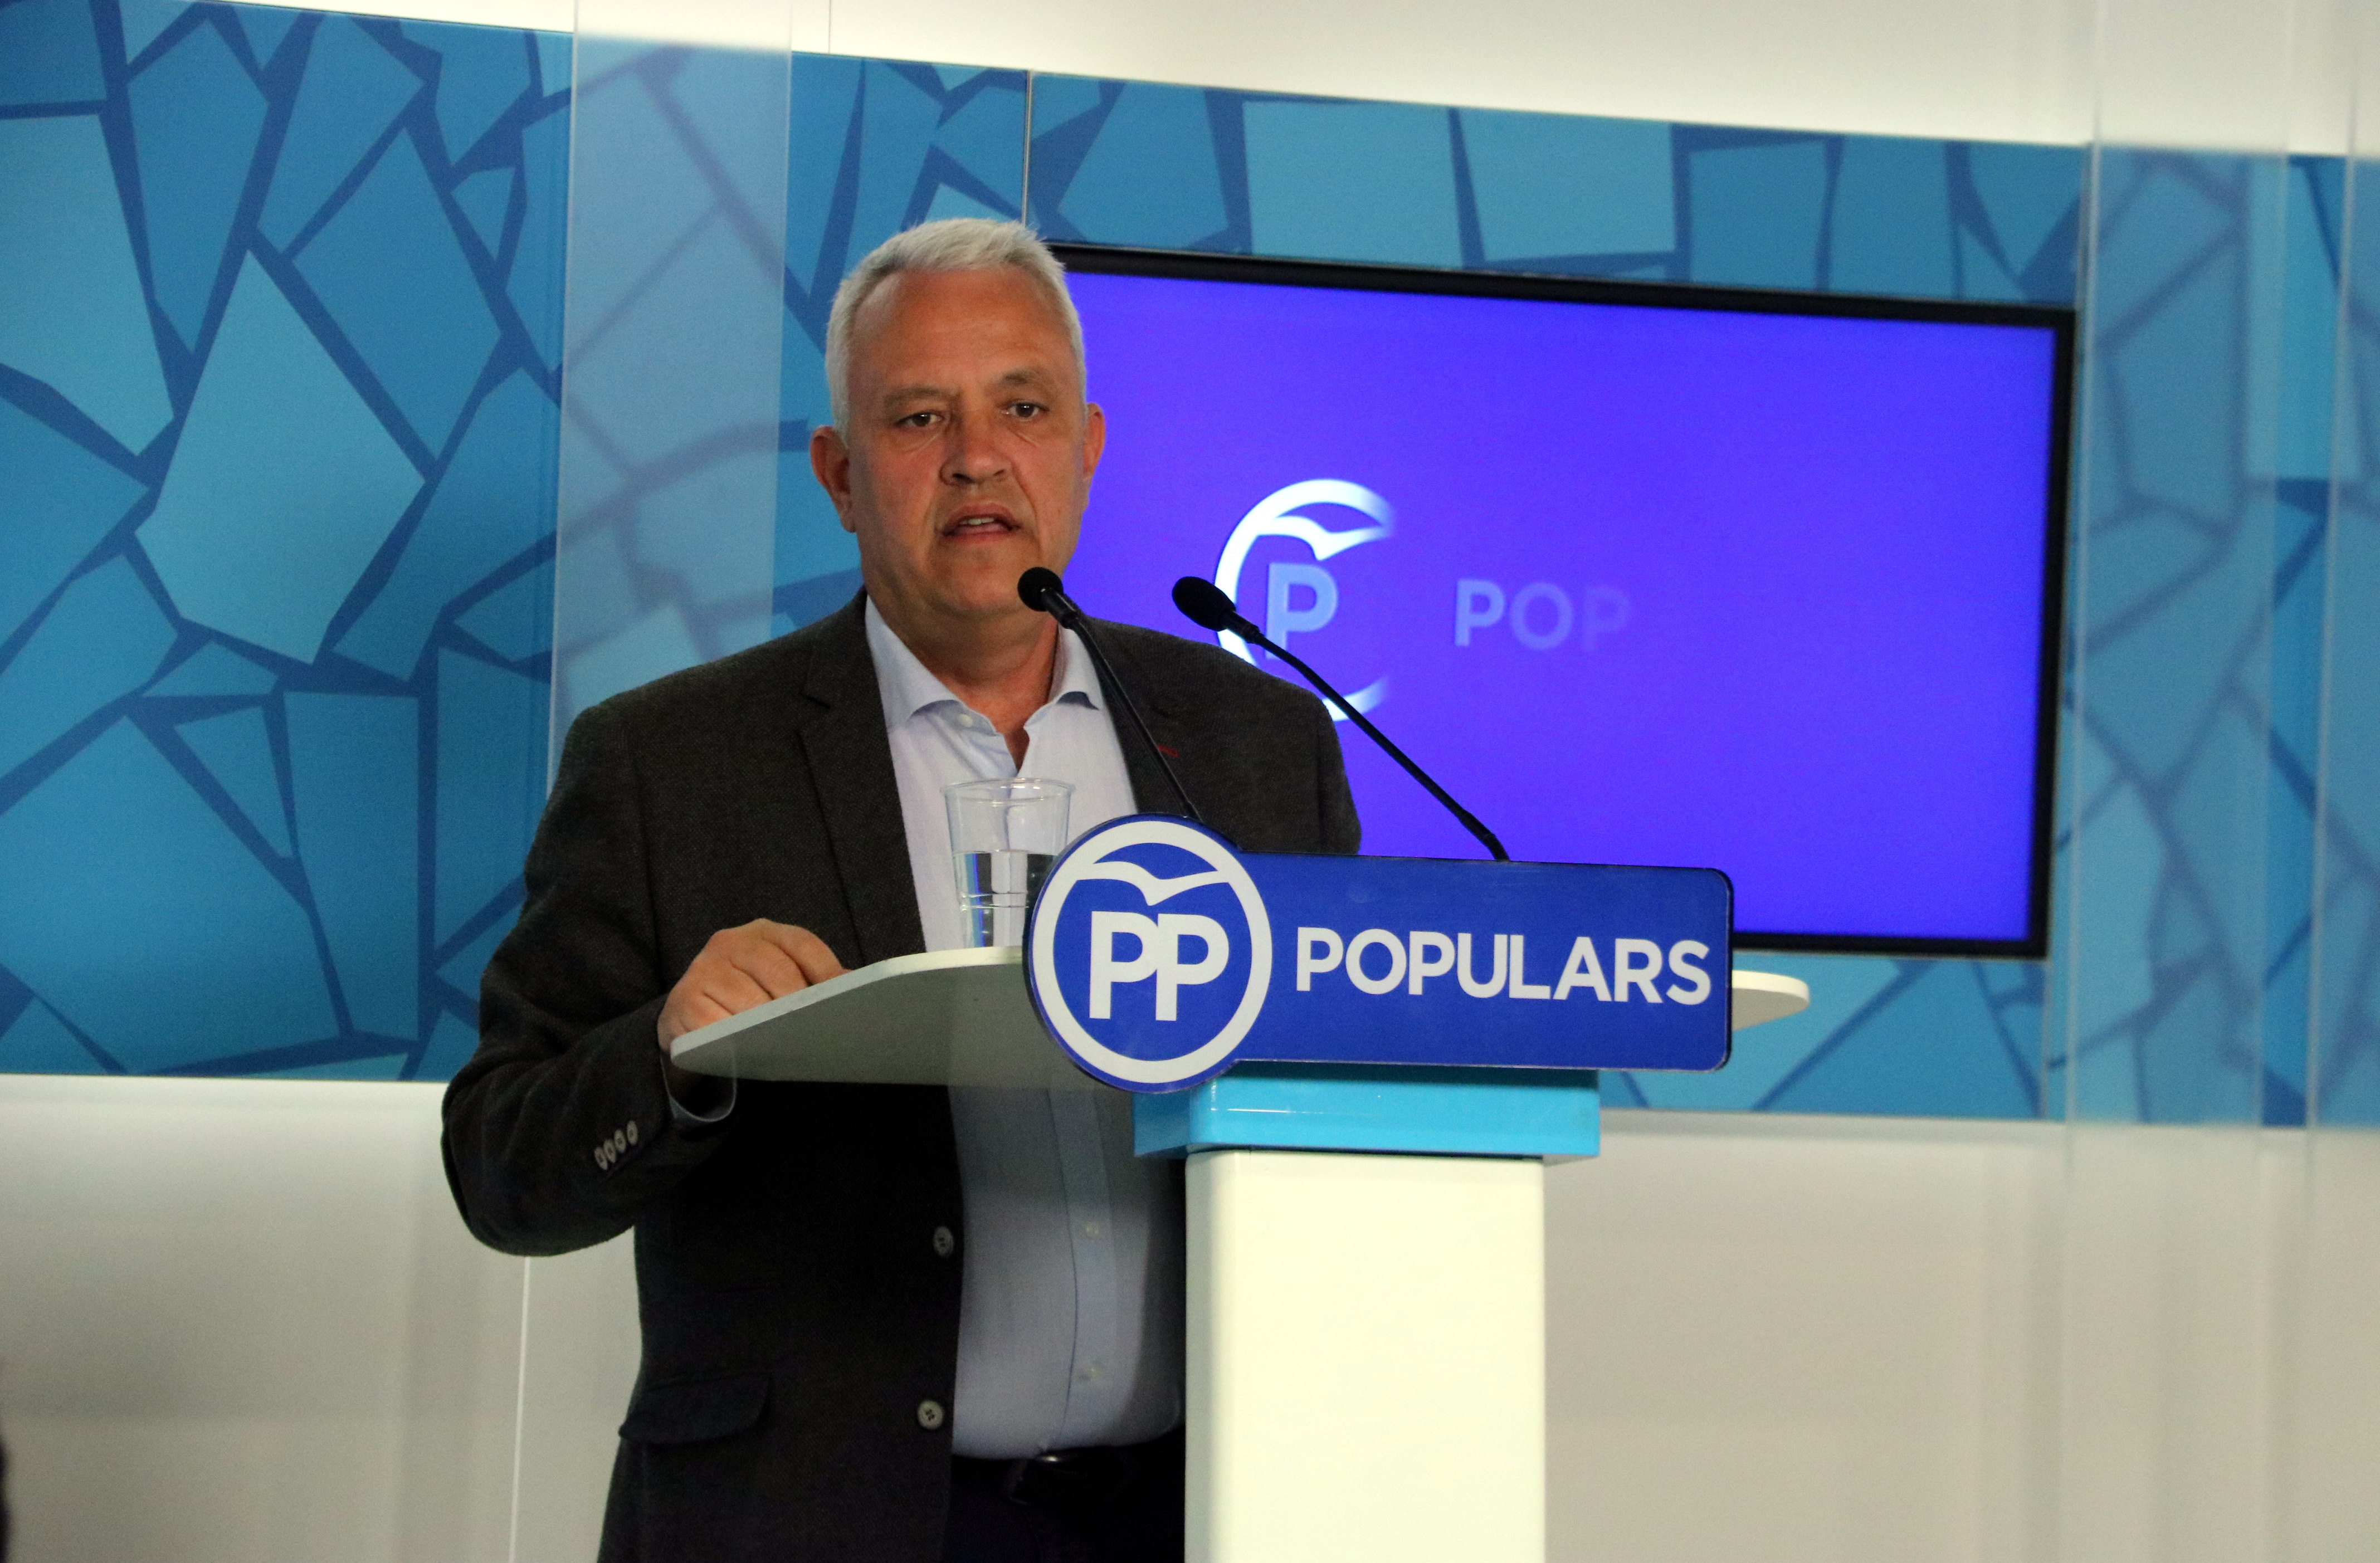 The PPC secretary general, Santi Rodríguez (by ACN)